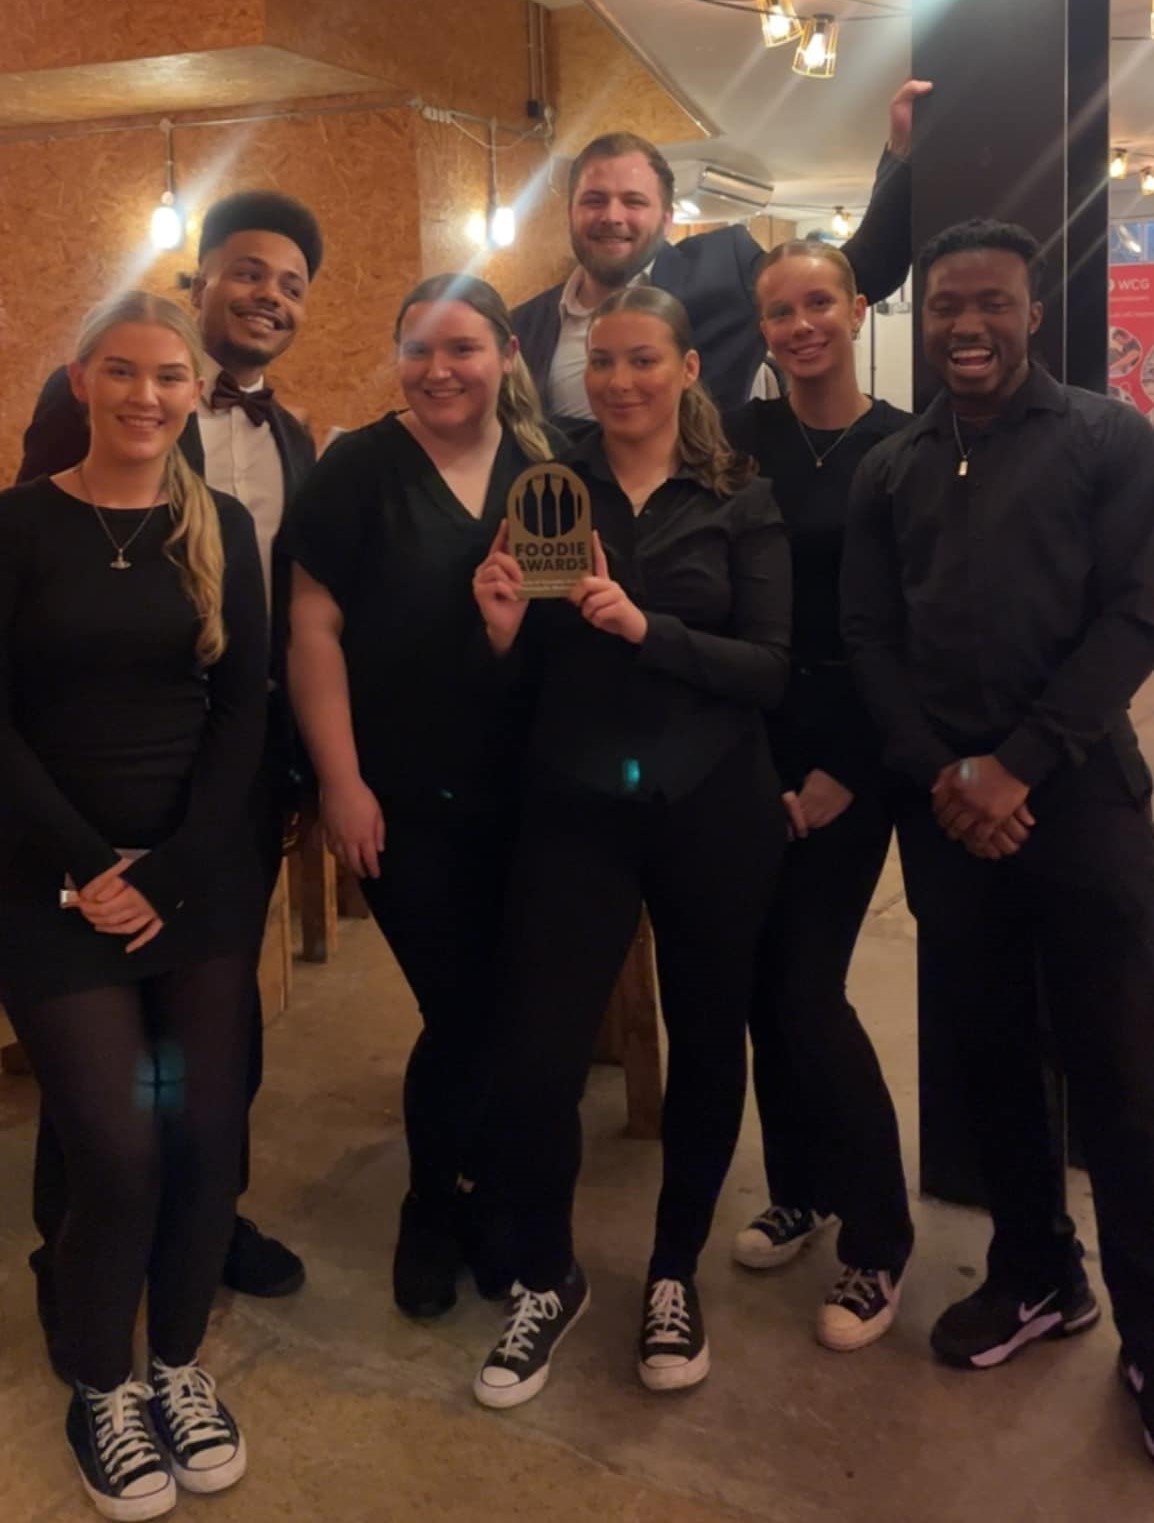 Coventry restaurant helping hundreds into hospitality celebrating after winning major public award